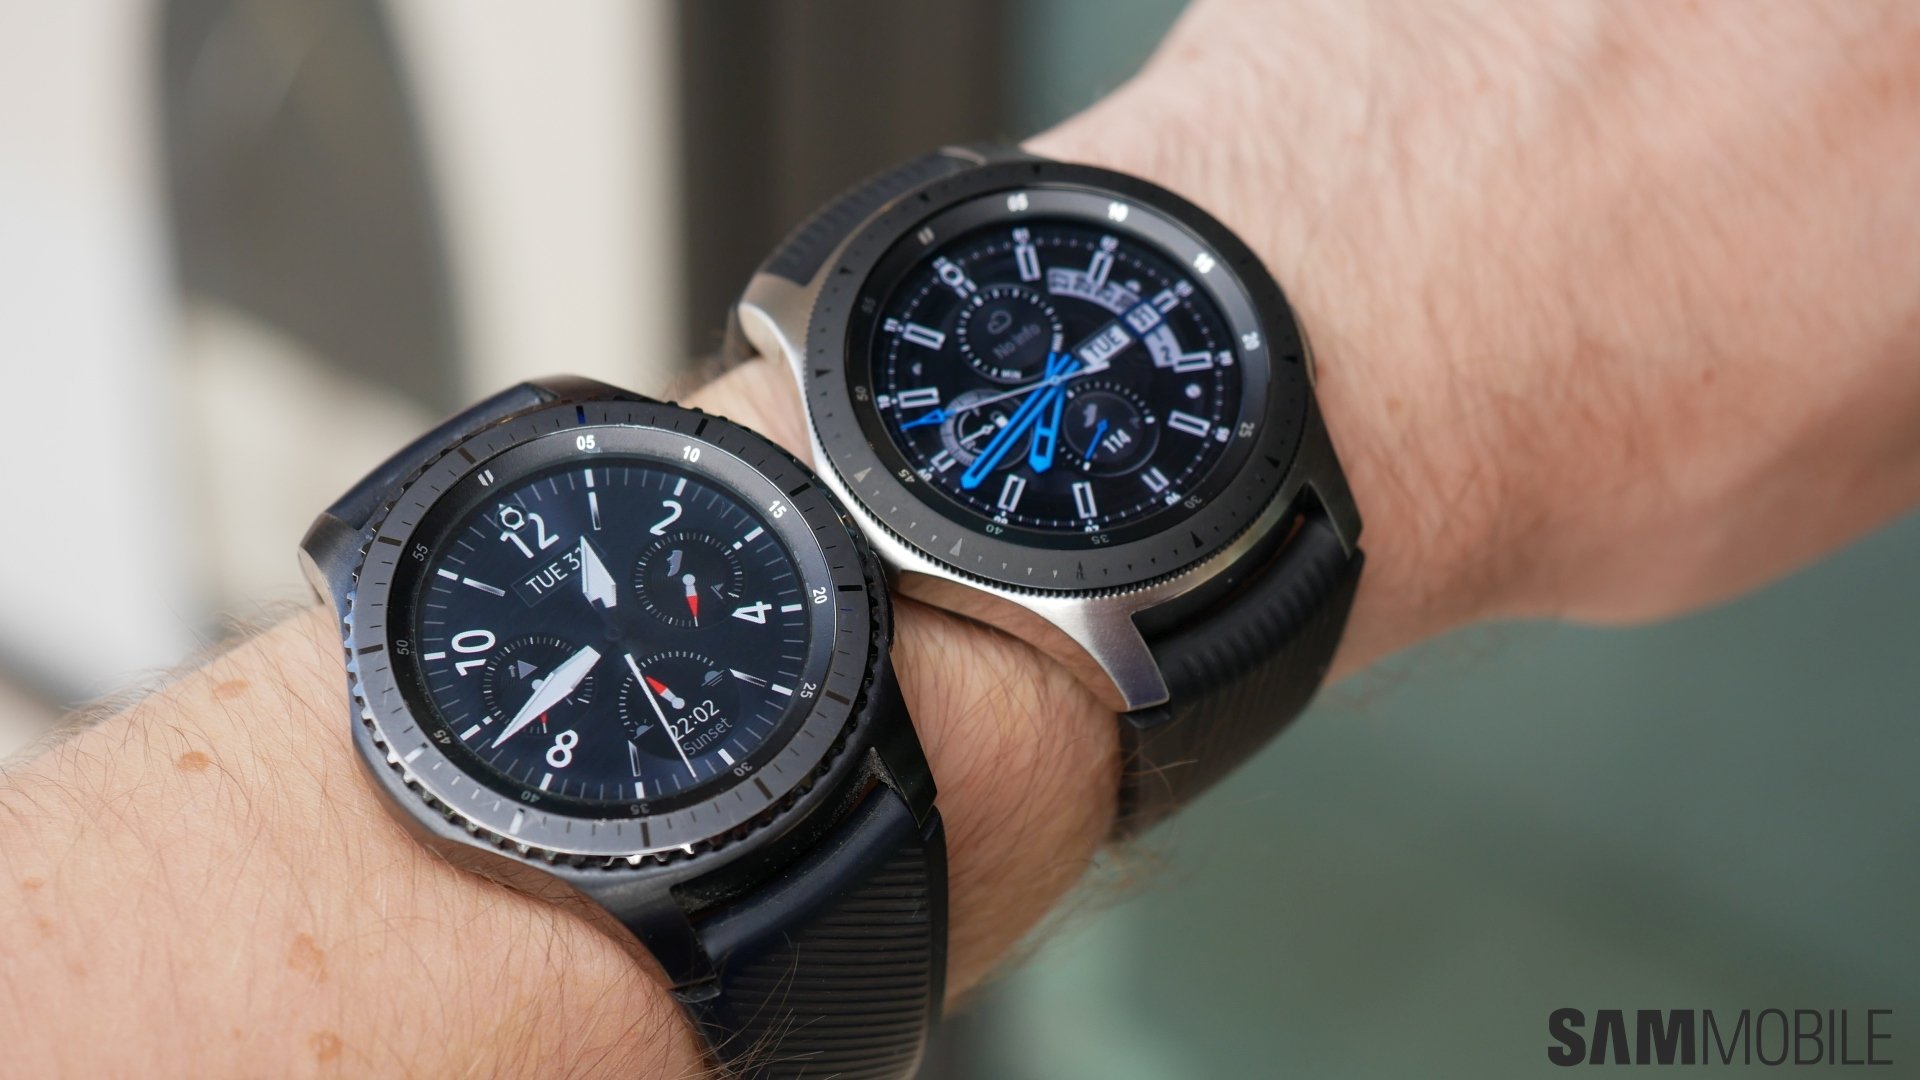 Samsung Galaxy Watch vs Gear pictures - SamMobile